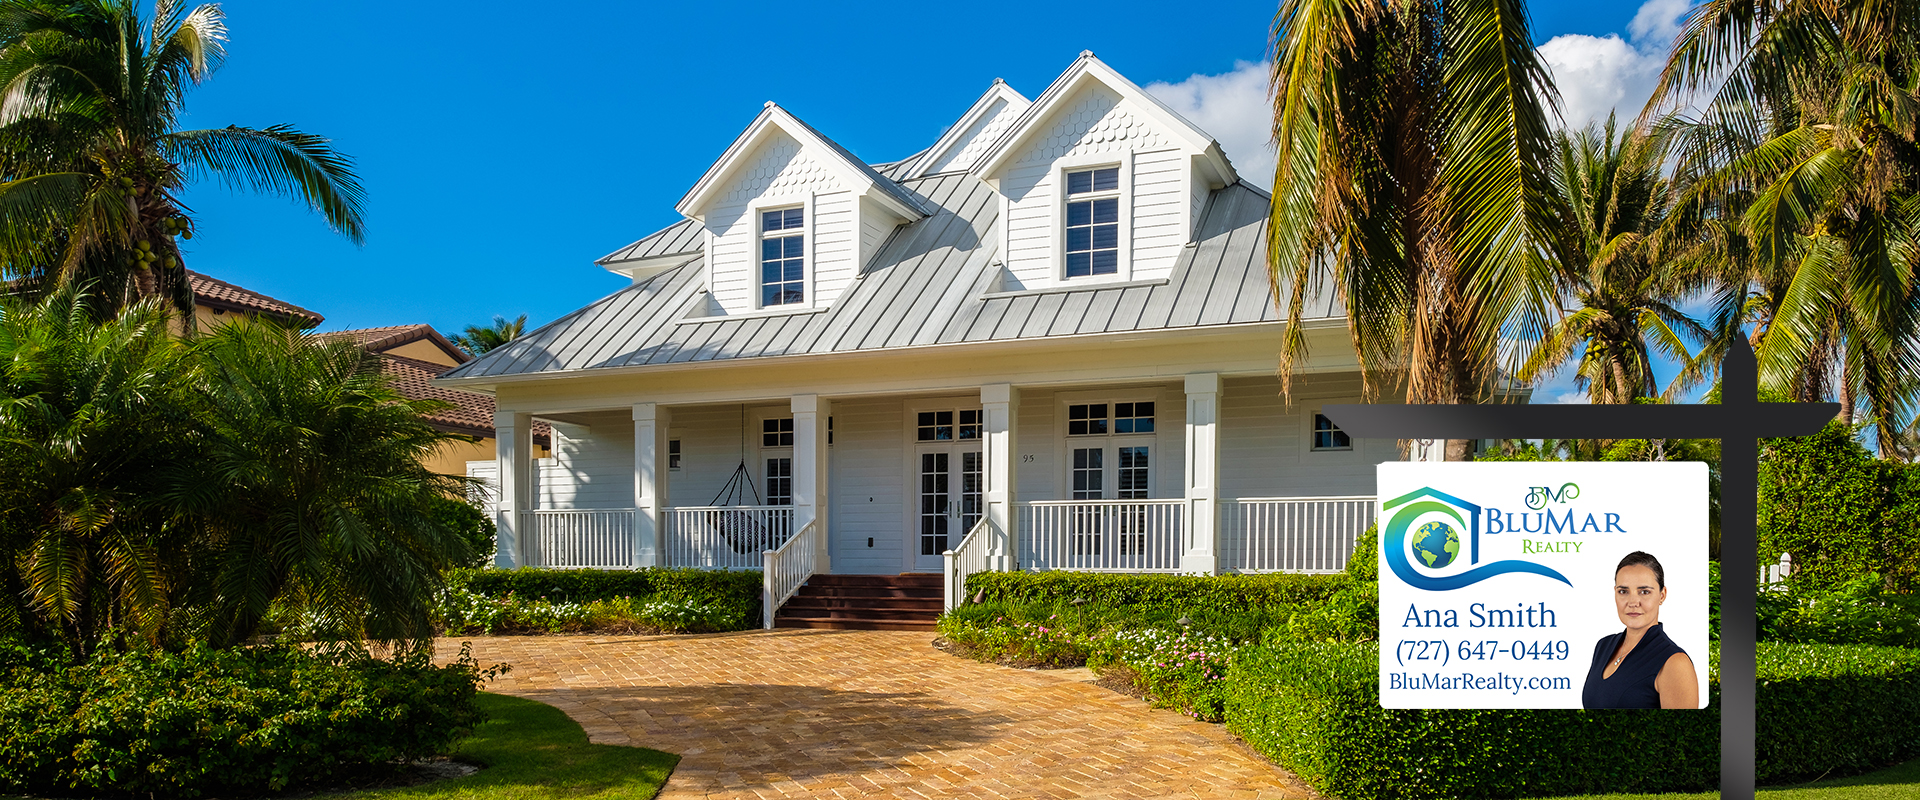 BluMar Realty - Listing Real Estate Agents - Tarpon Springs Florida